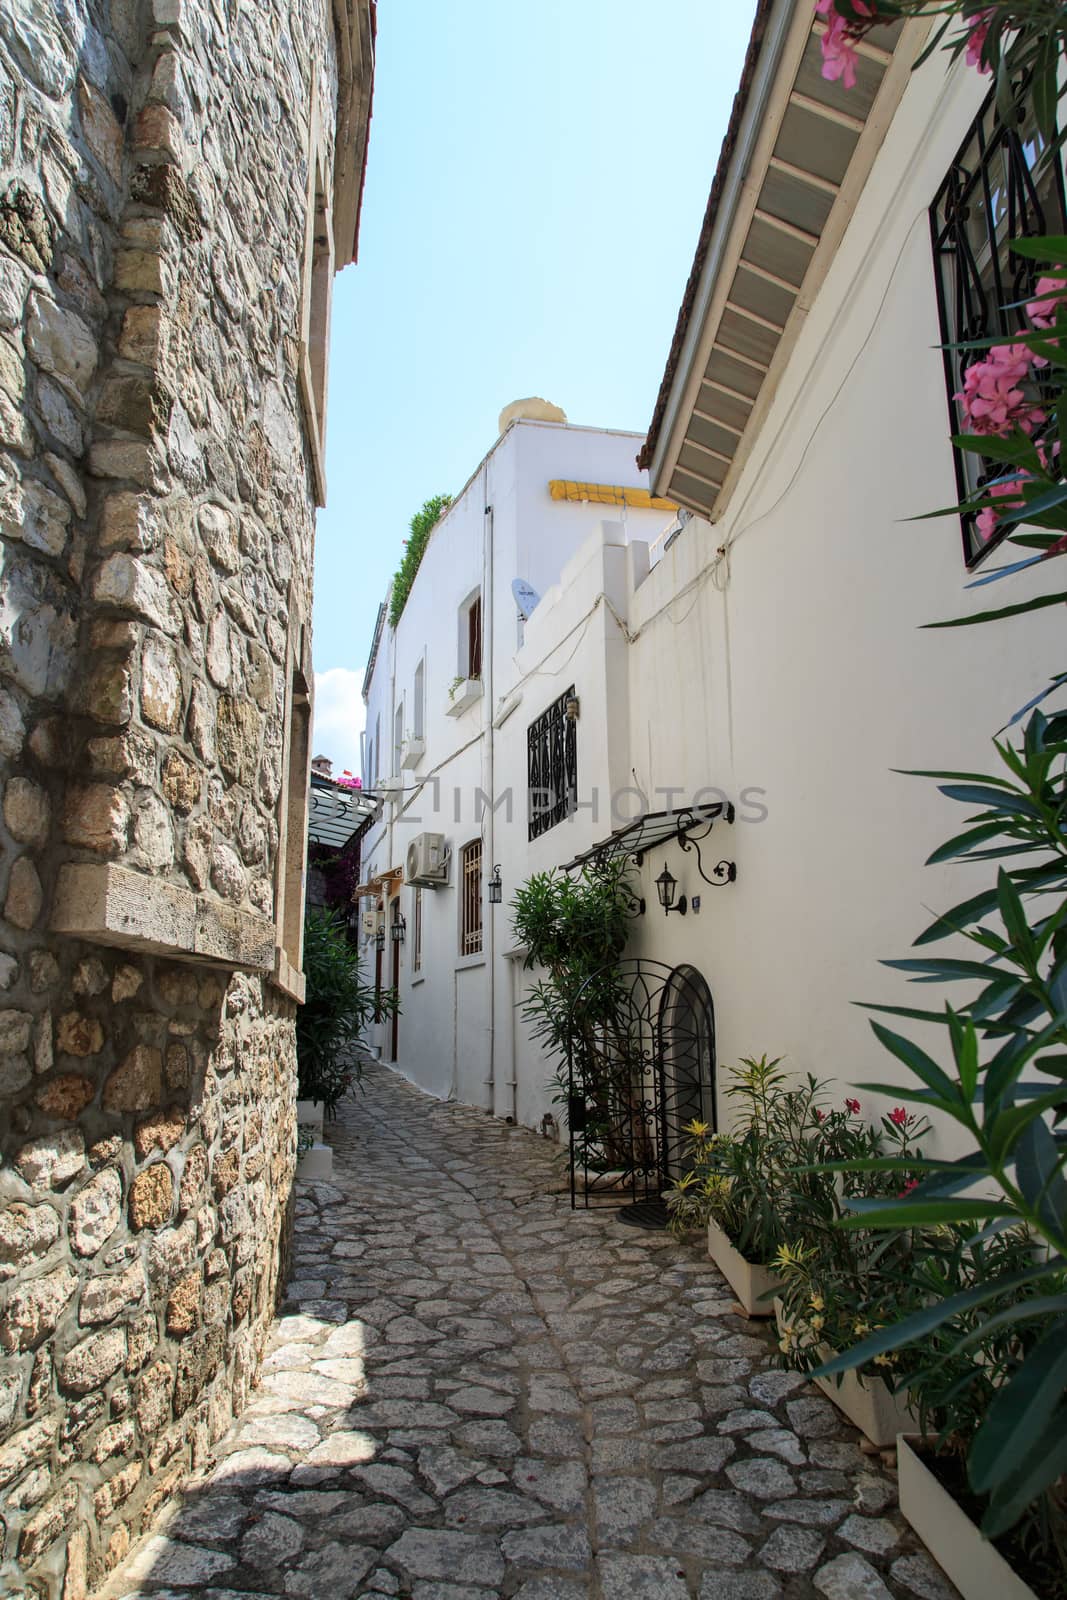 Historical stone houses and narrow street, under bright sunny sky.